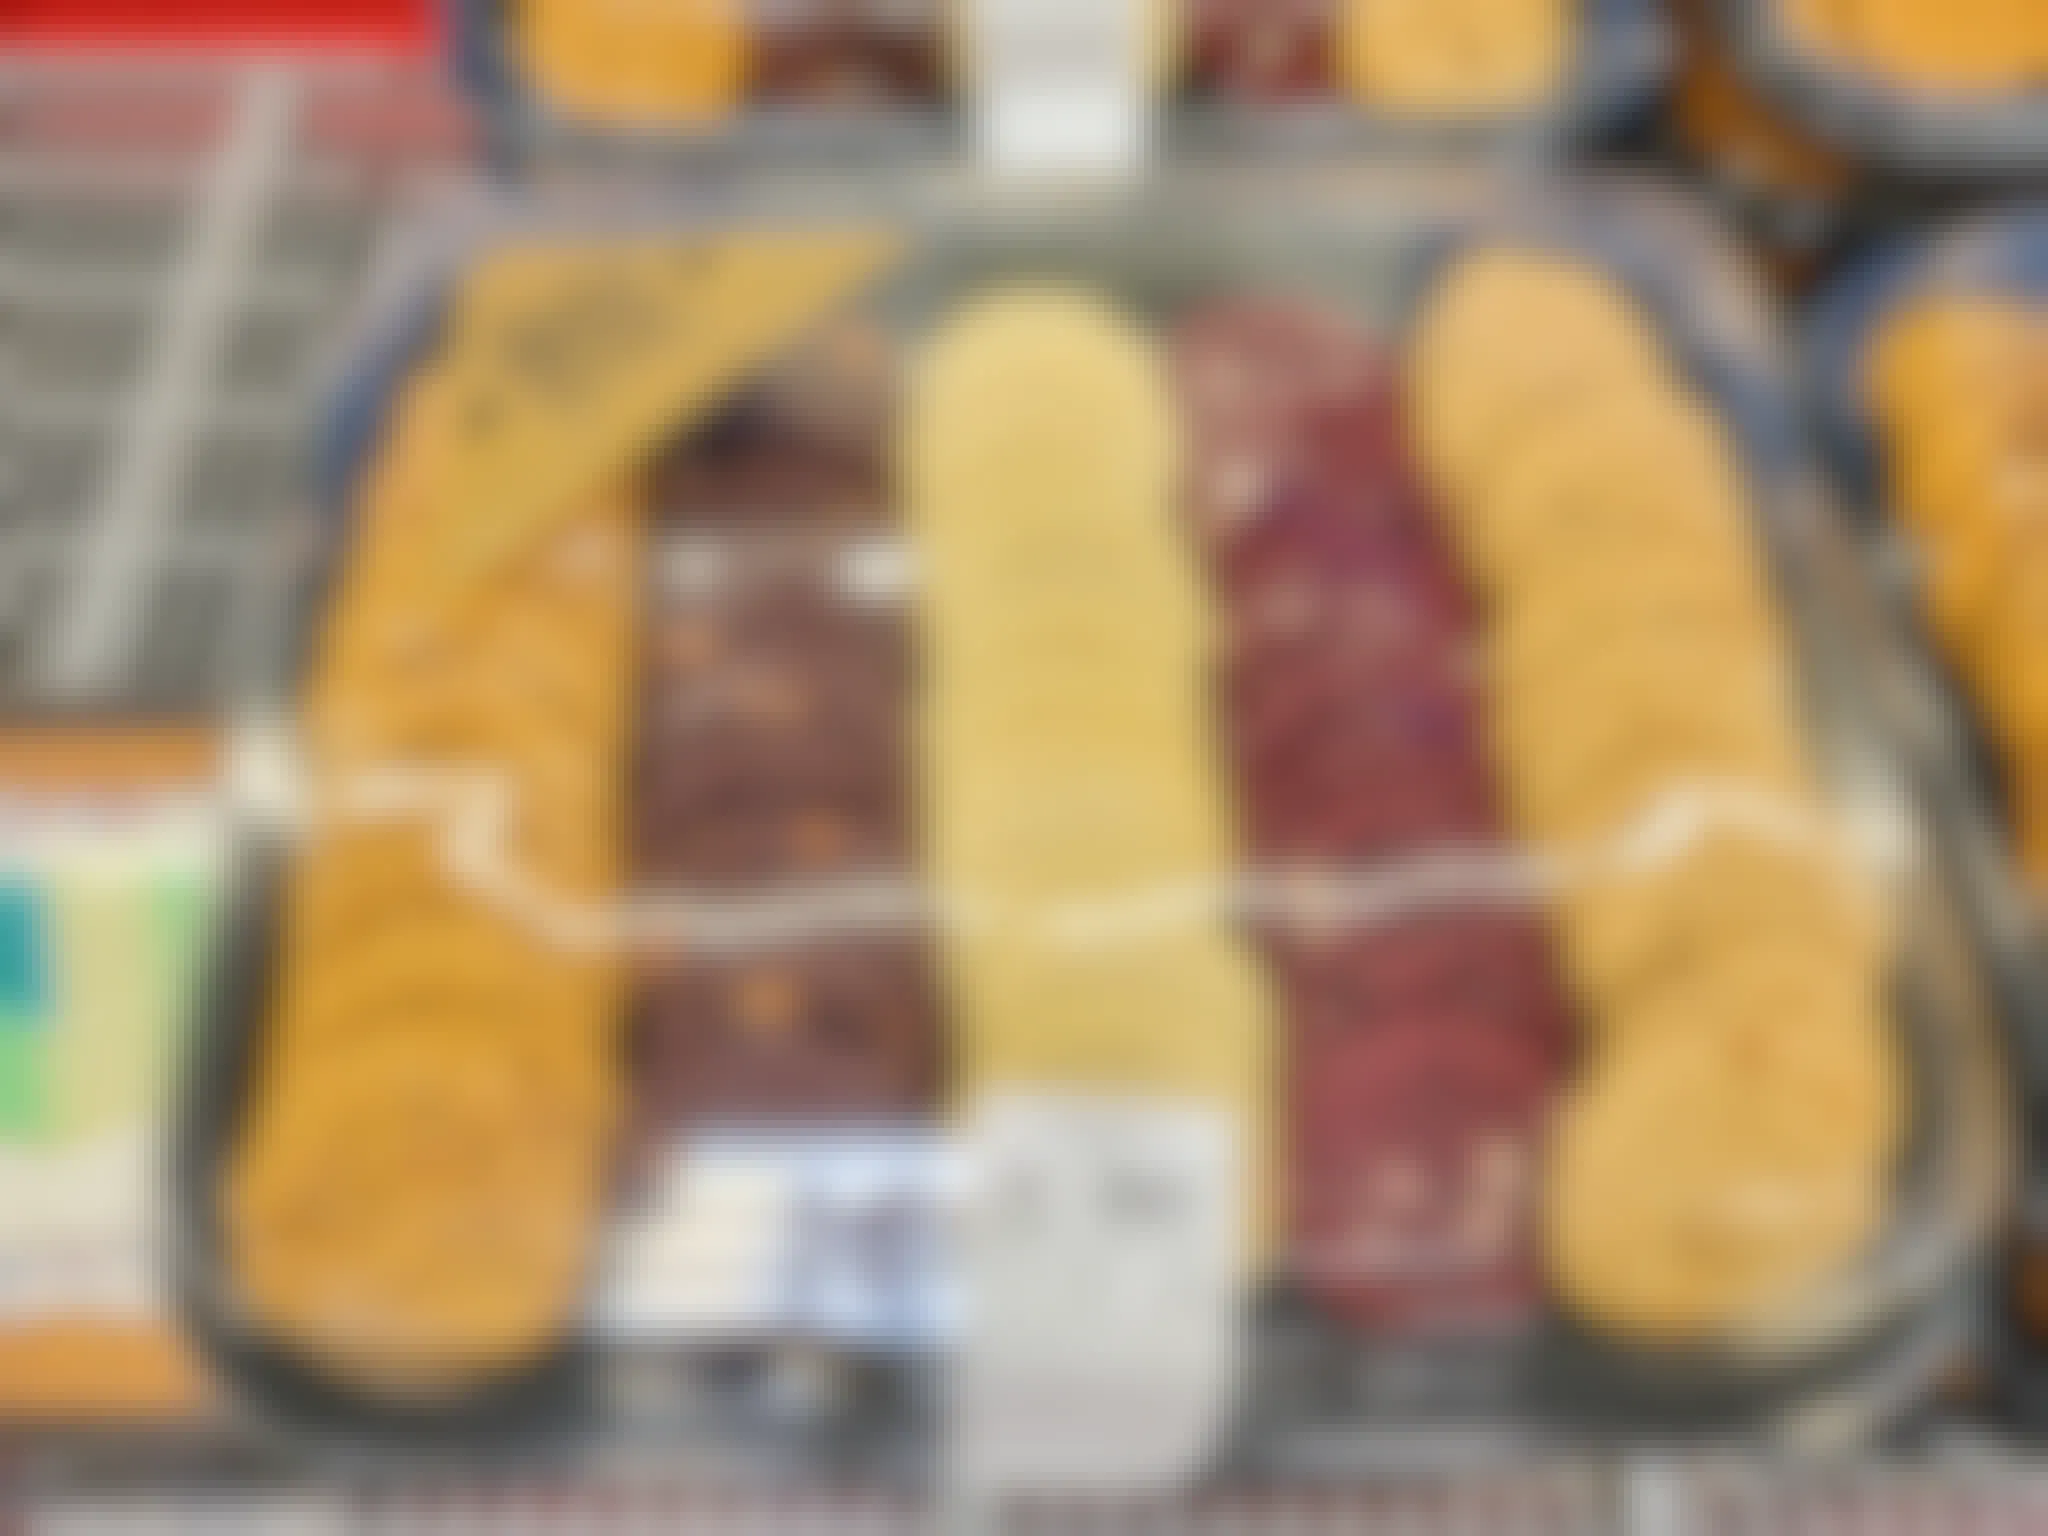 a tray of seasonal flavored cookies